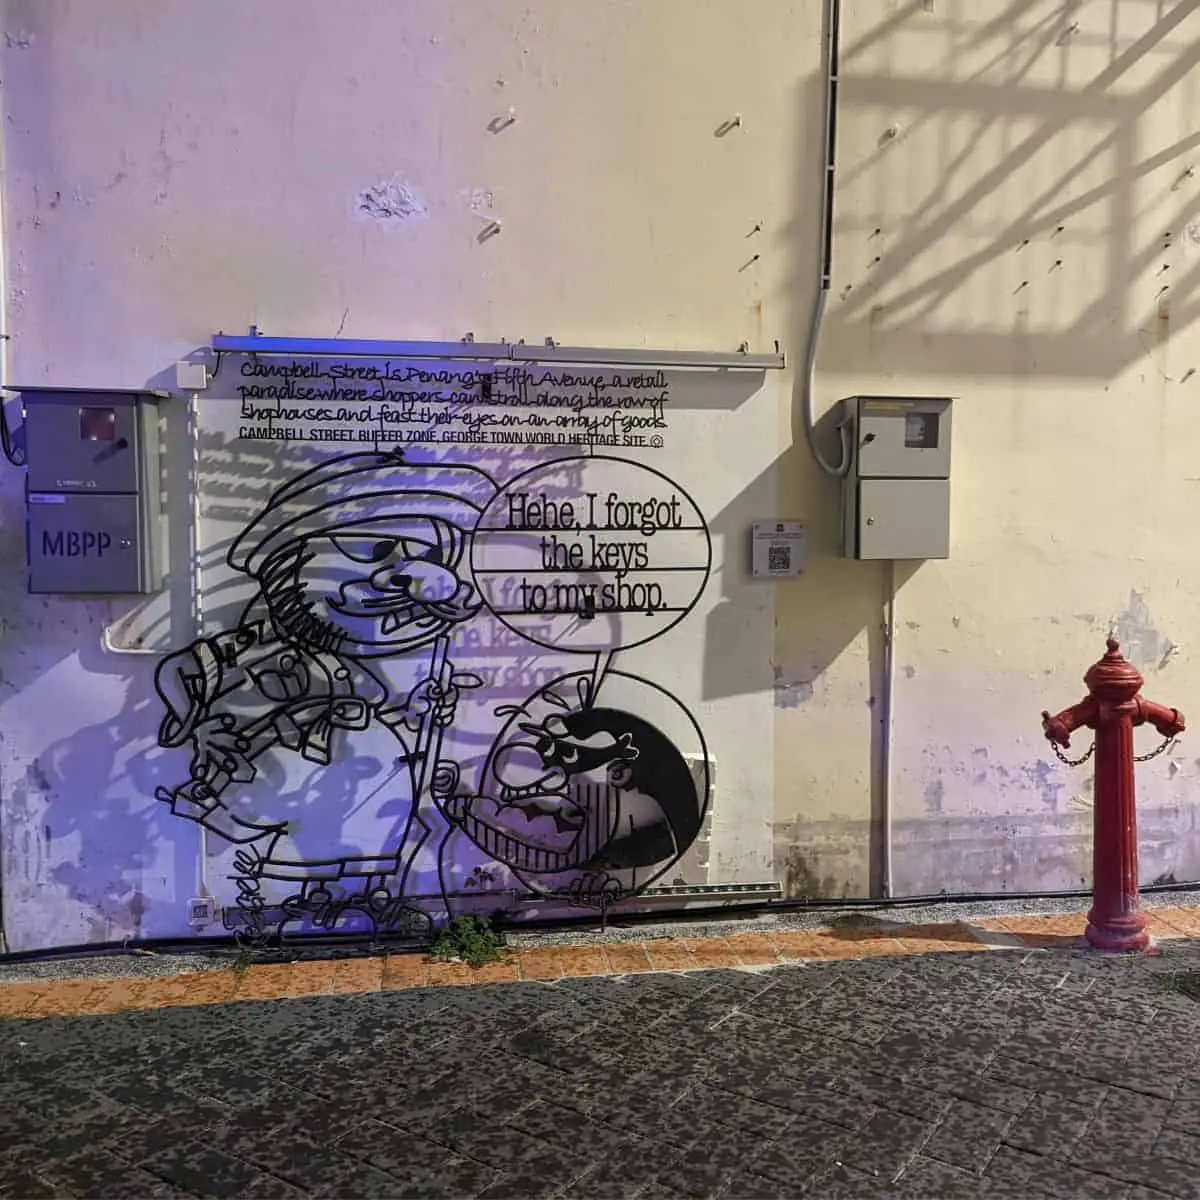 Campbell Street Penang Street Art at night